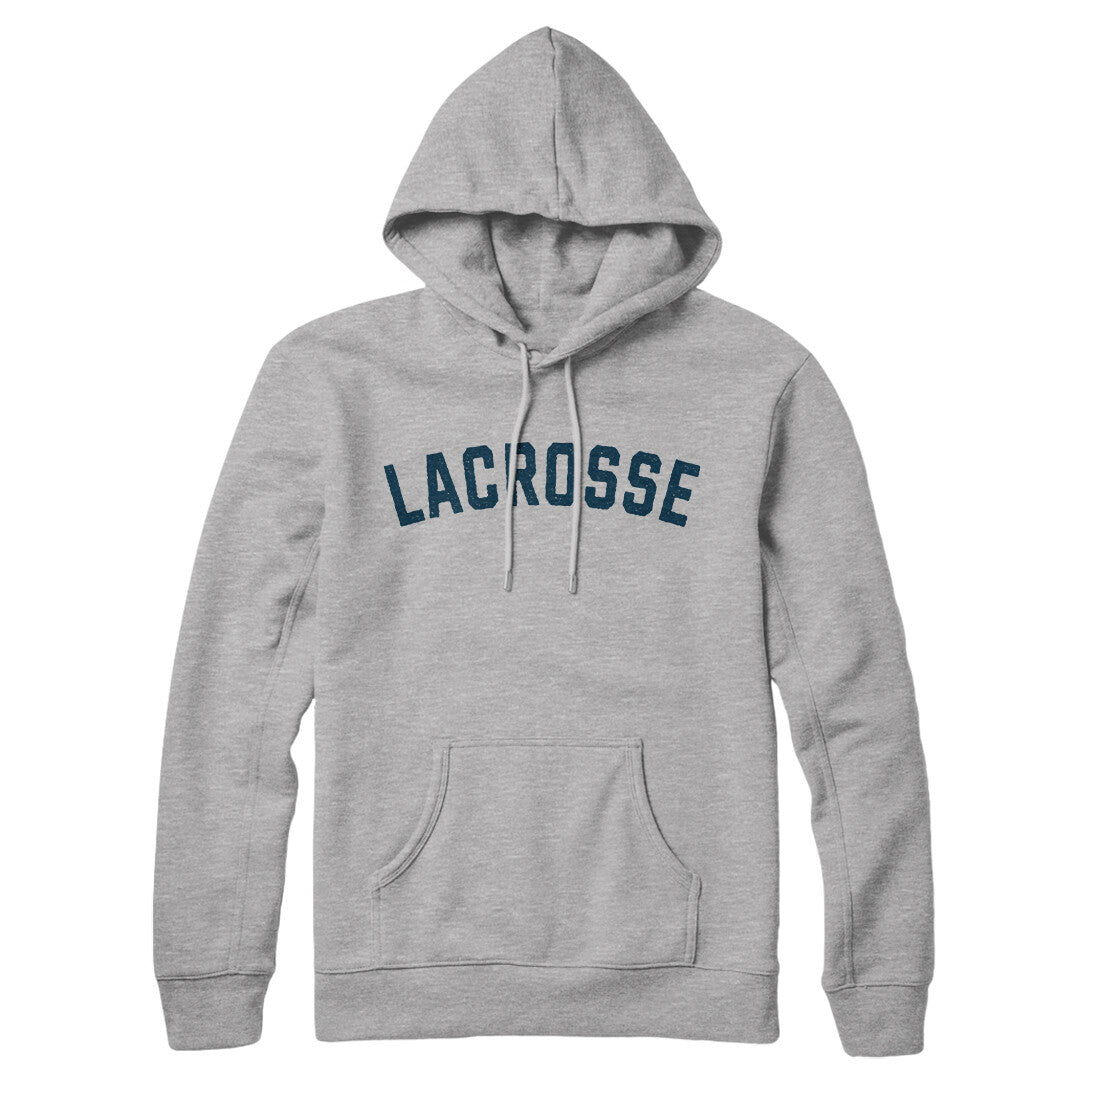 Lacrosse in Heather Grey Color